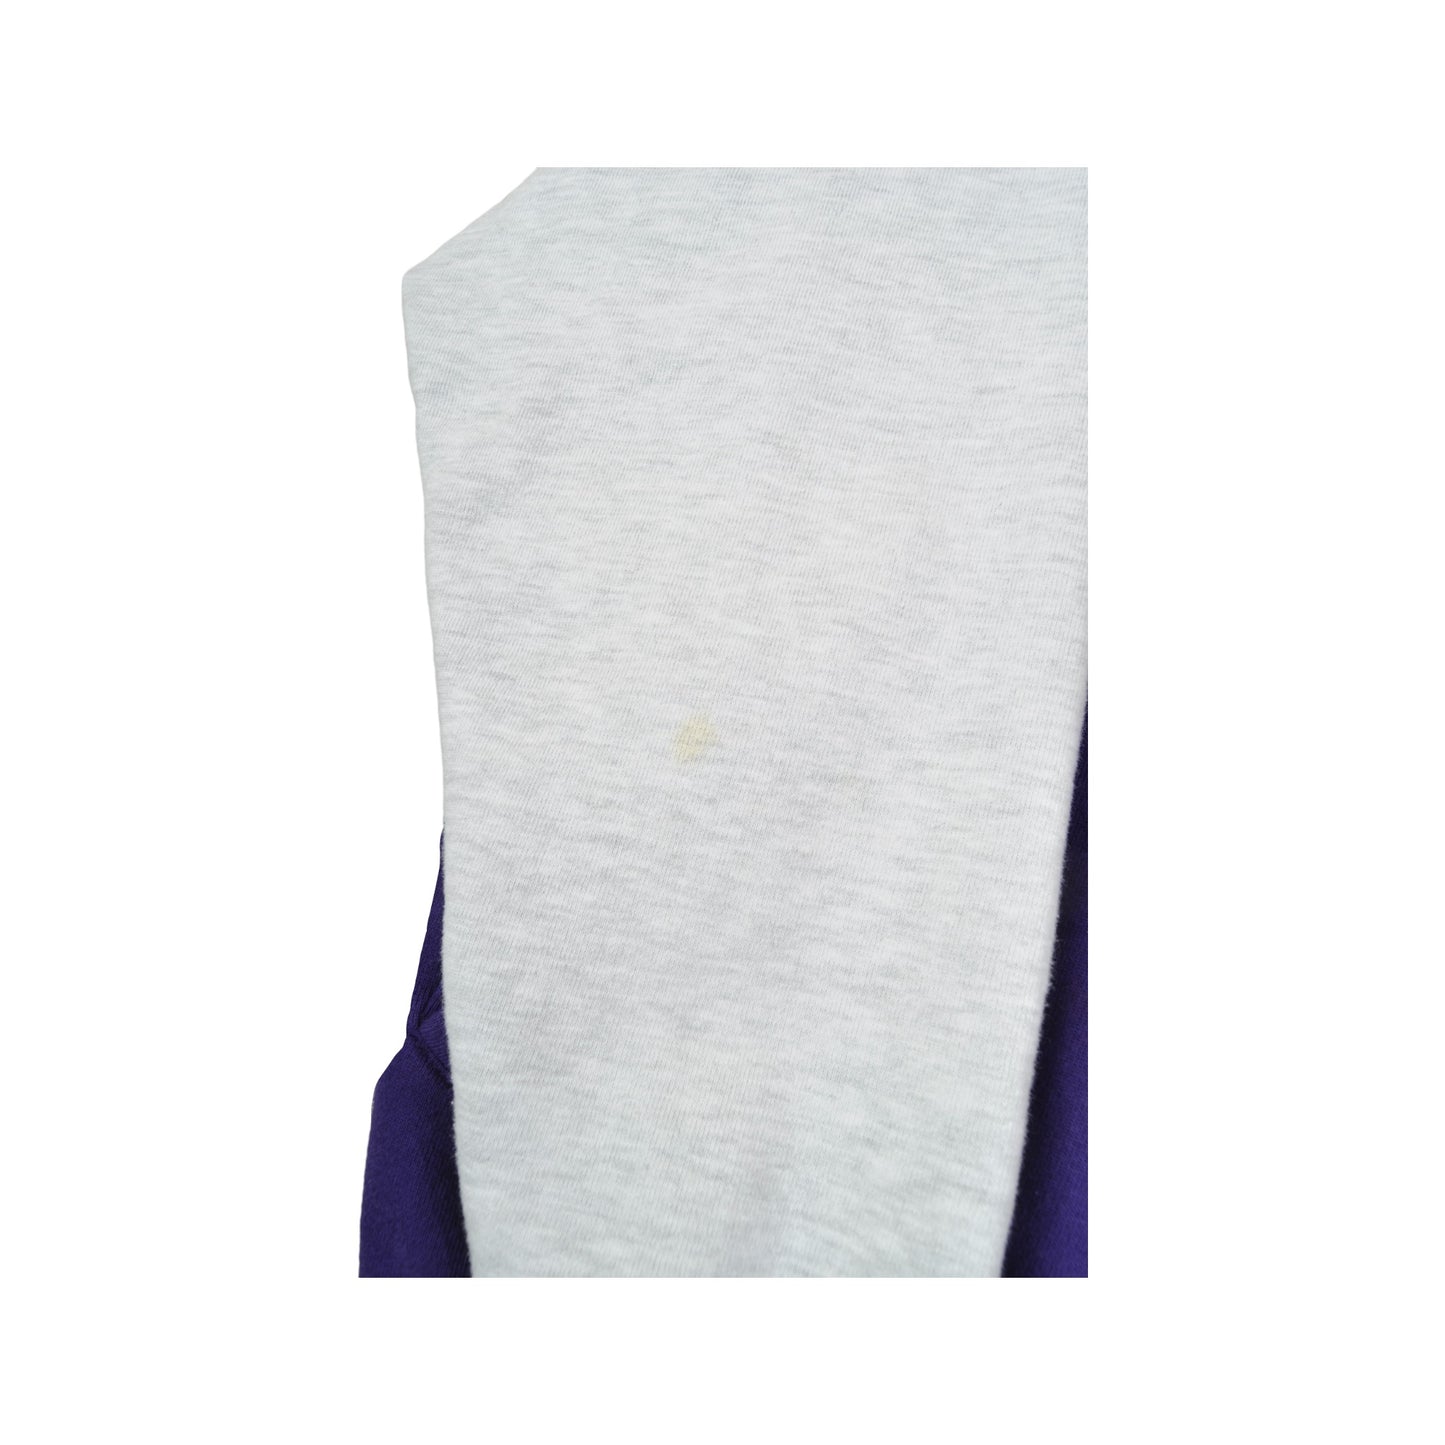 Vintage Russell Athletic High Cotton Sweatshirt Bomber Jacket Purple/Grey XL